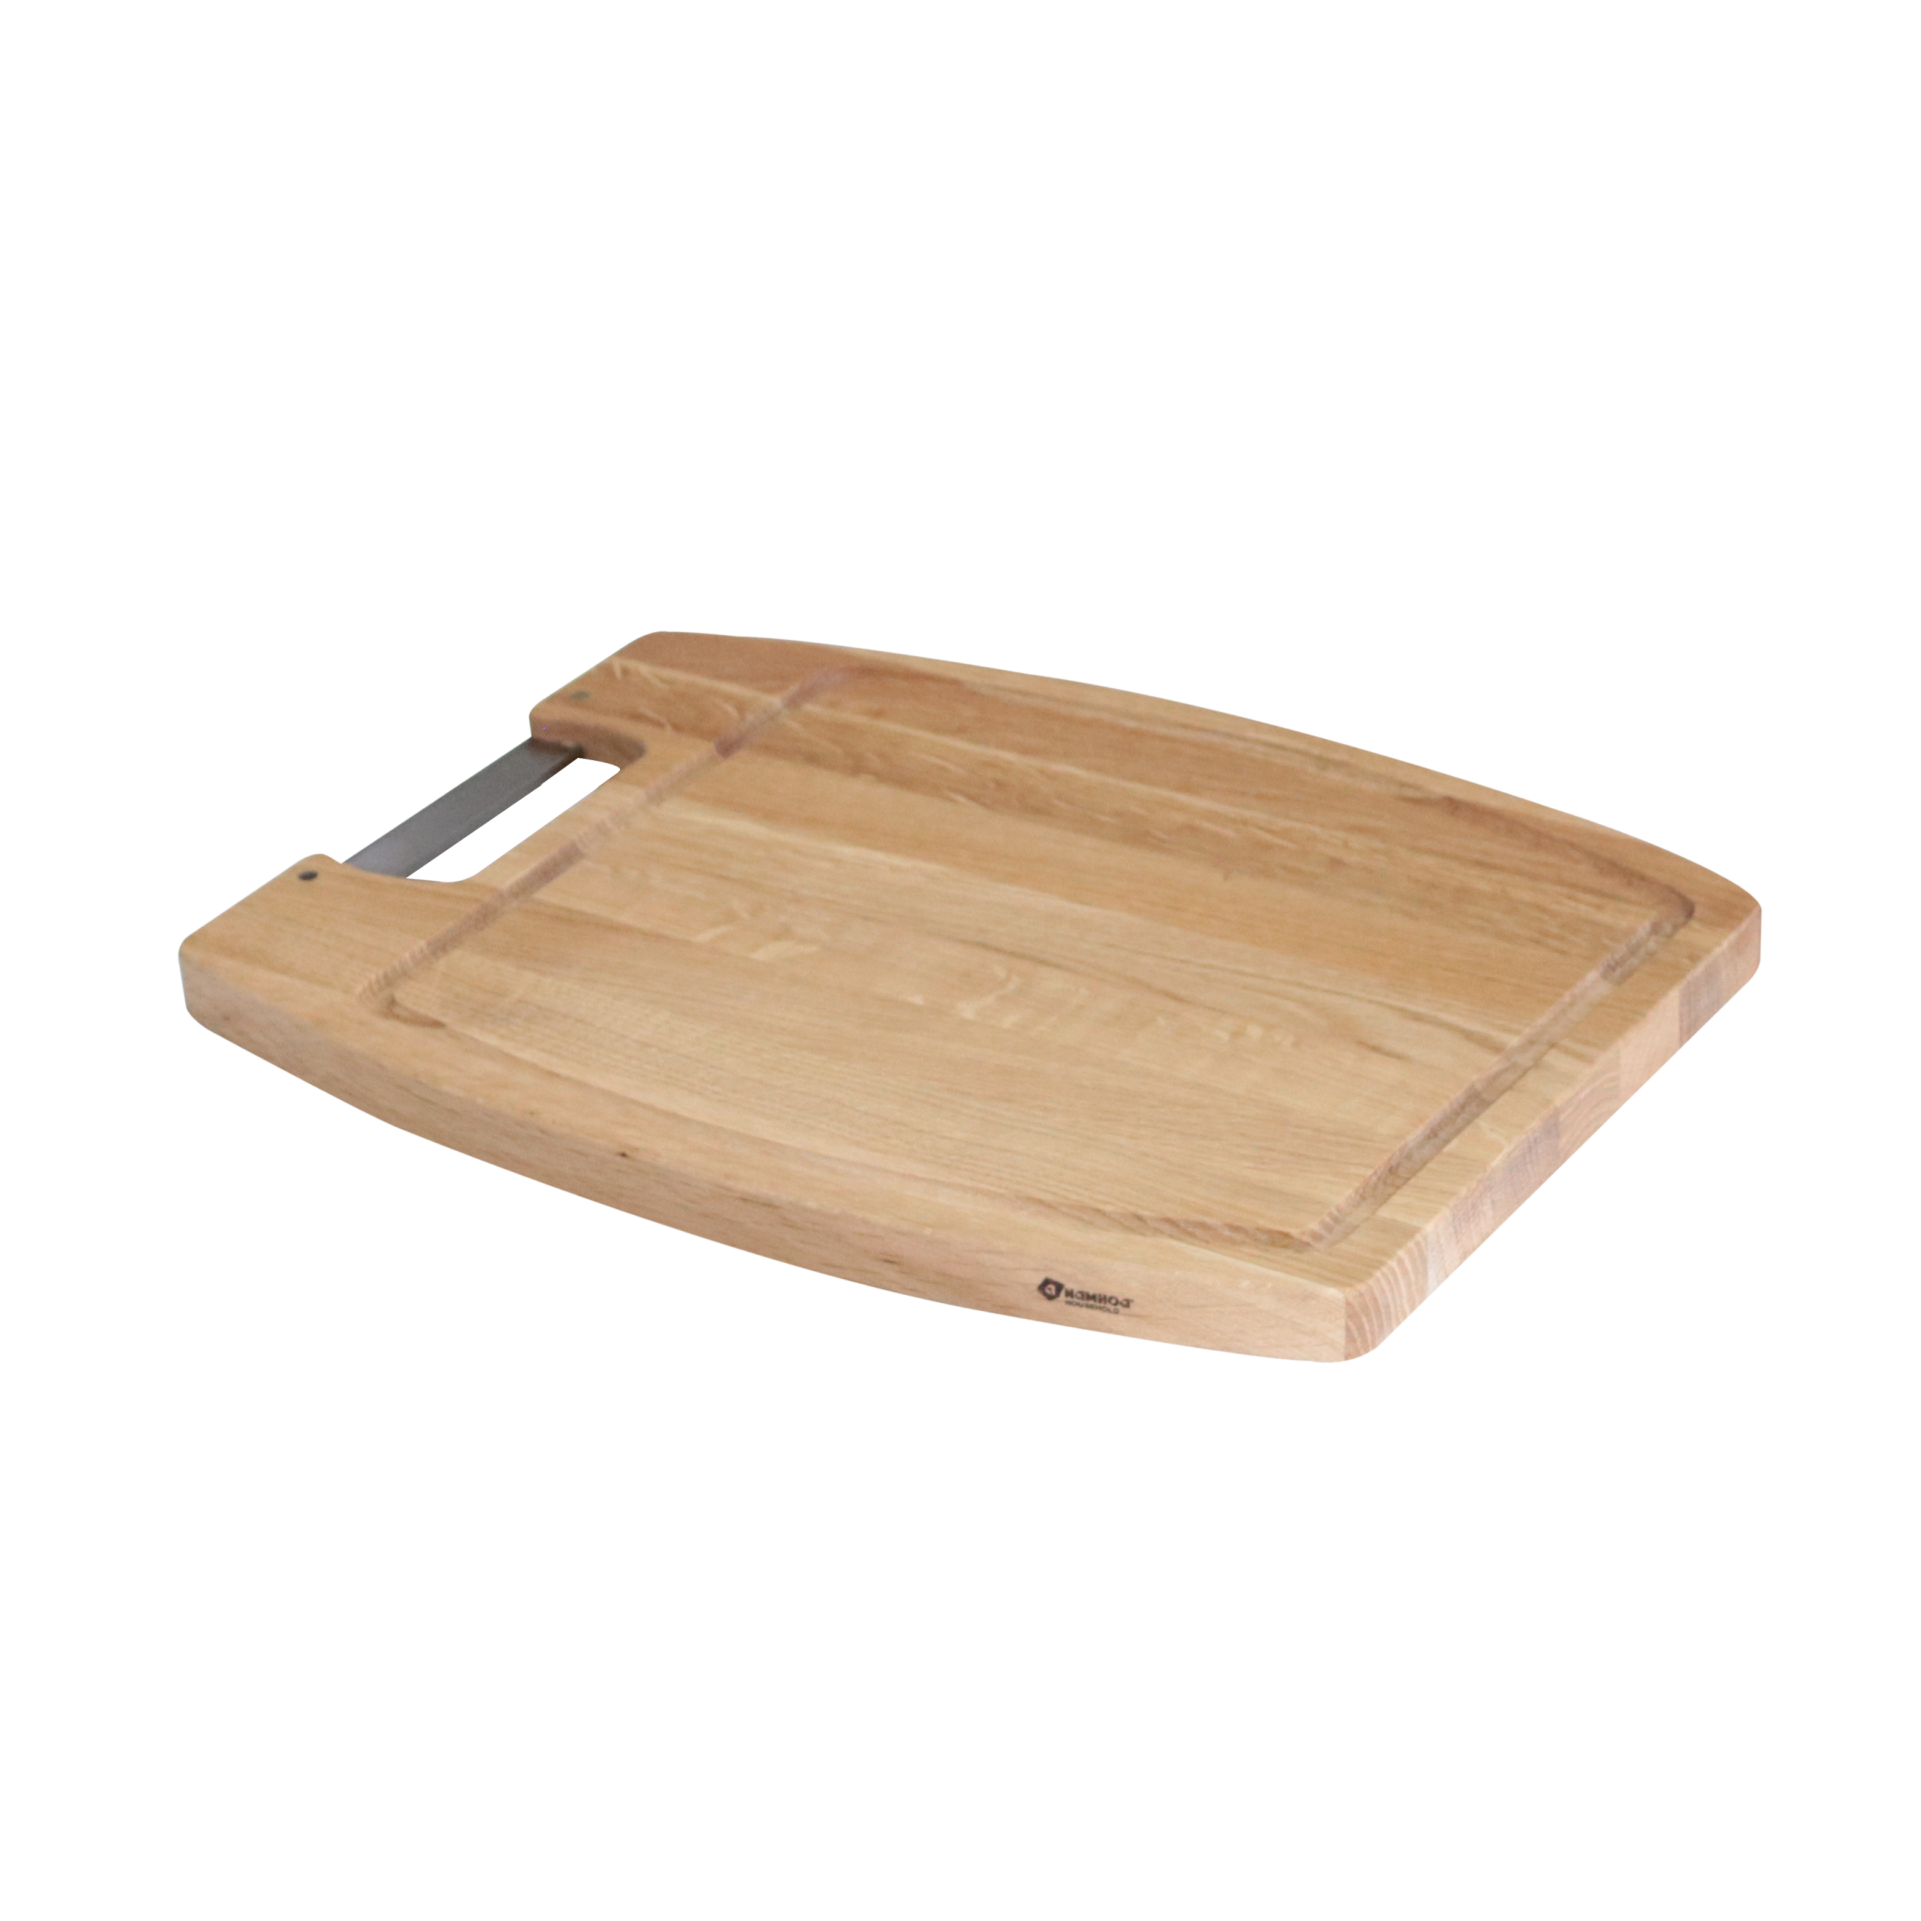 Strive white Oak Cutting board with inox handle